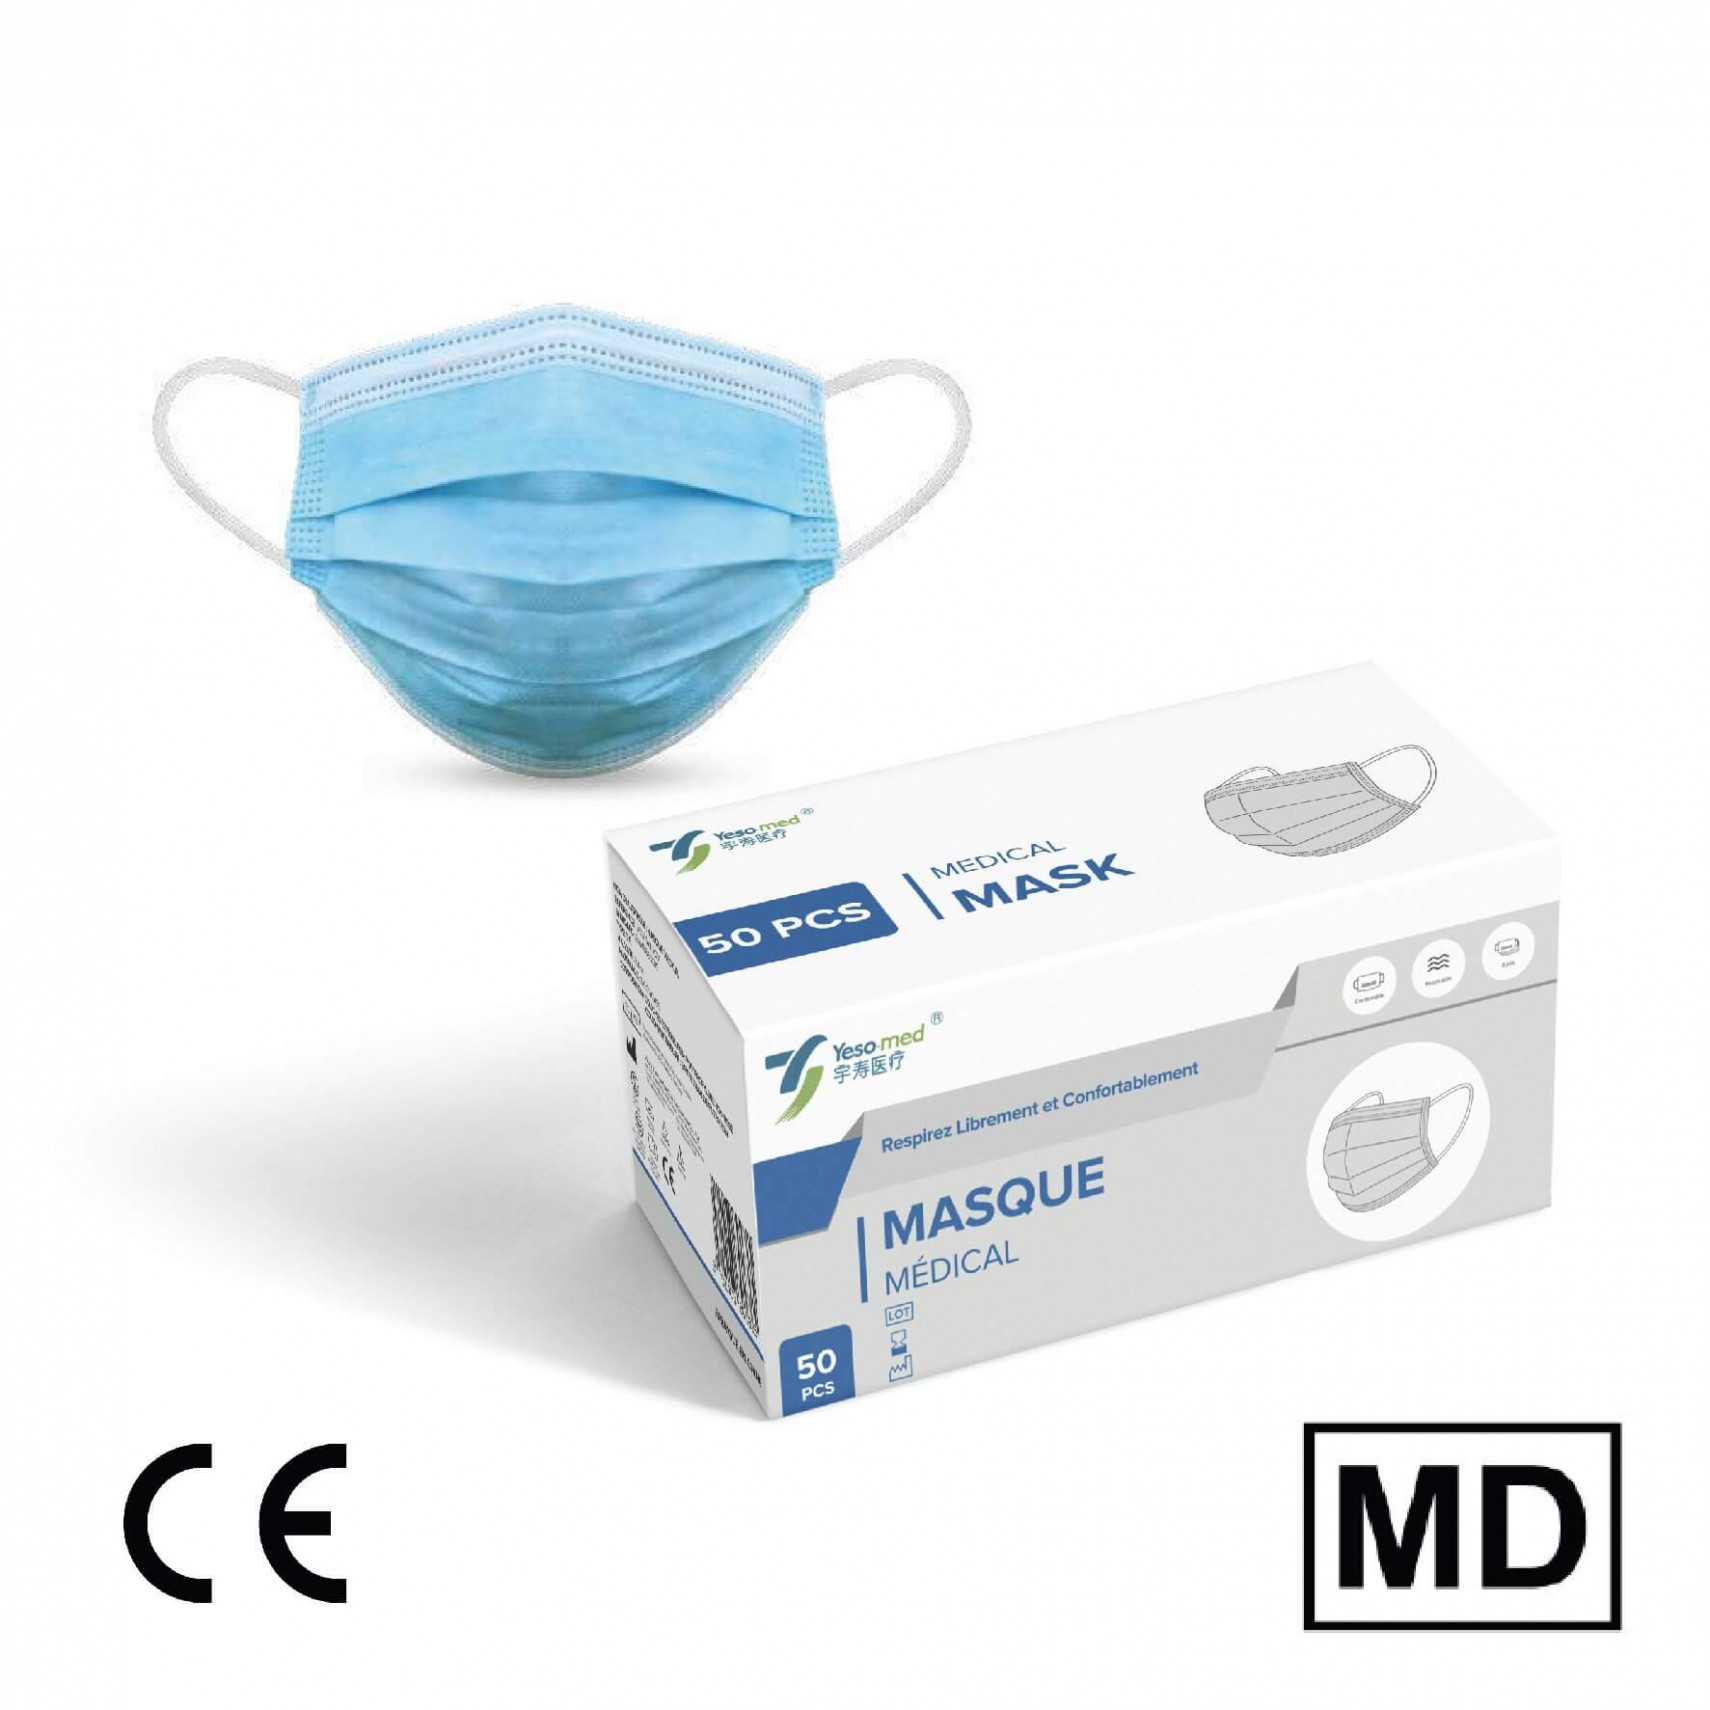 Masque chirurgical jetable (Lot de 50) - Norme CE